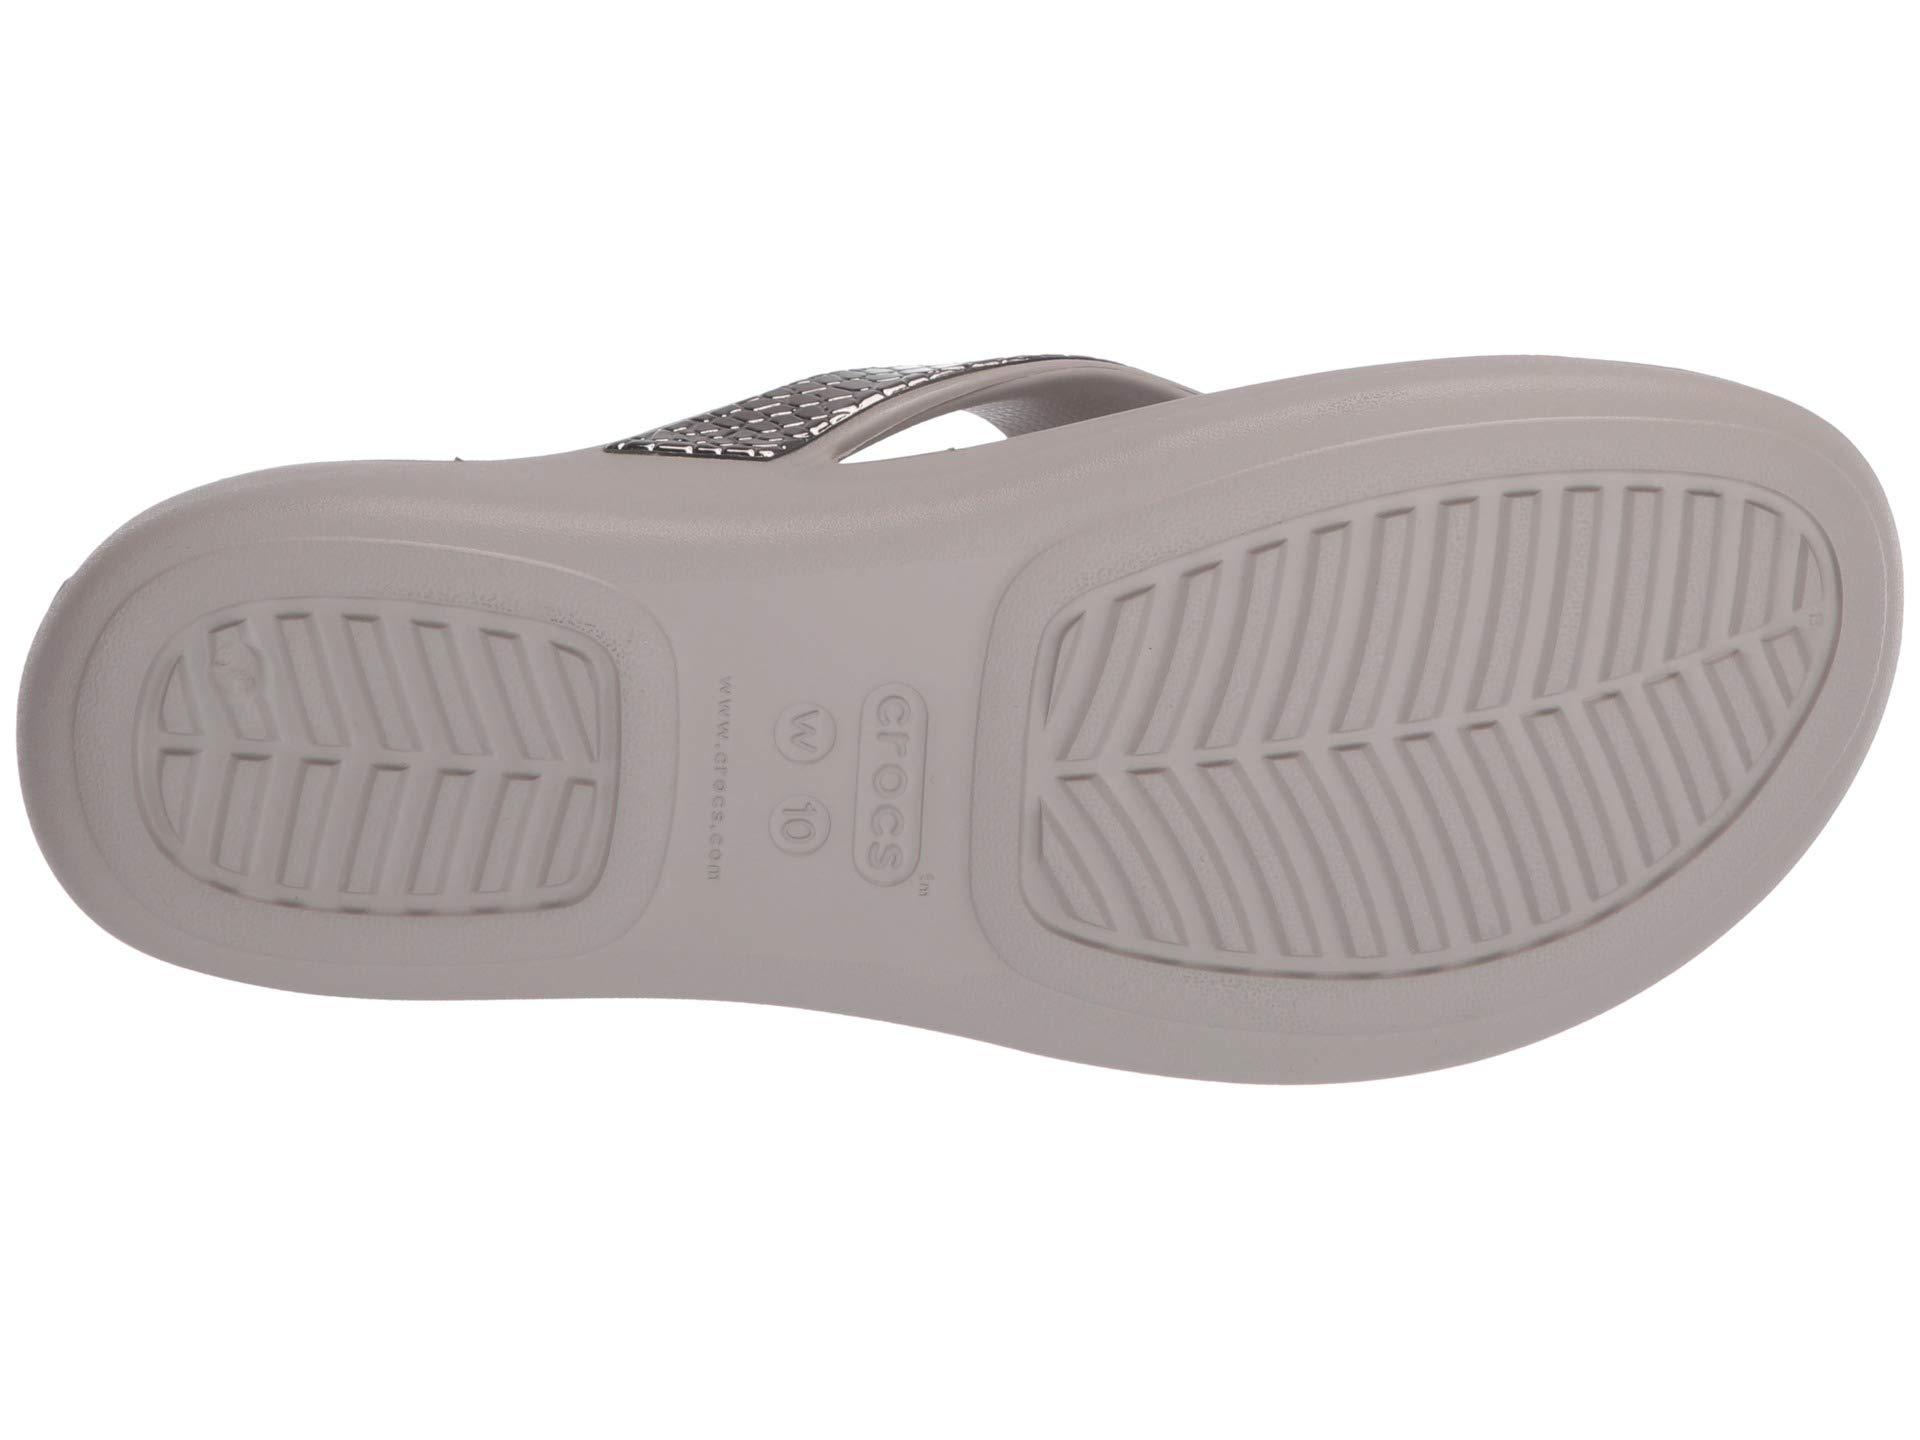 Crocs Monterey Metallic Wedge Flip Sandale cale Femme